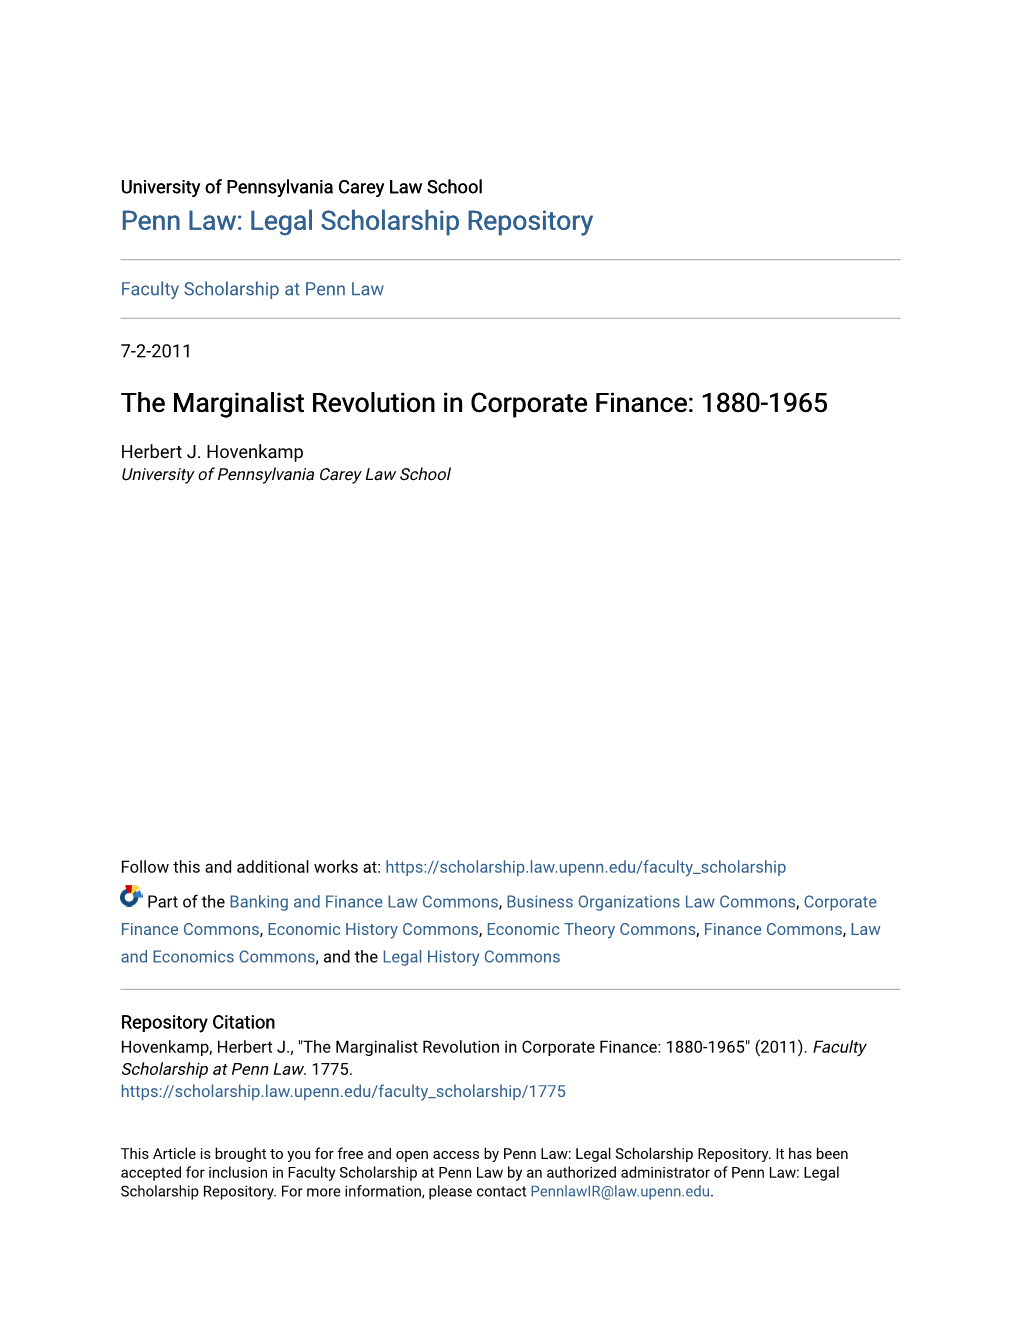 The Marginalist Revolution in Corporate Finance: 1880-1965